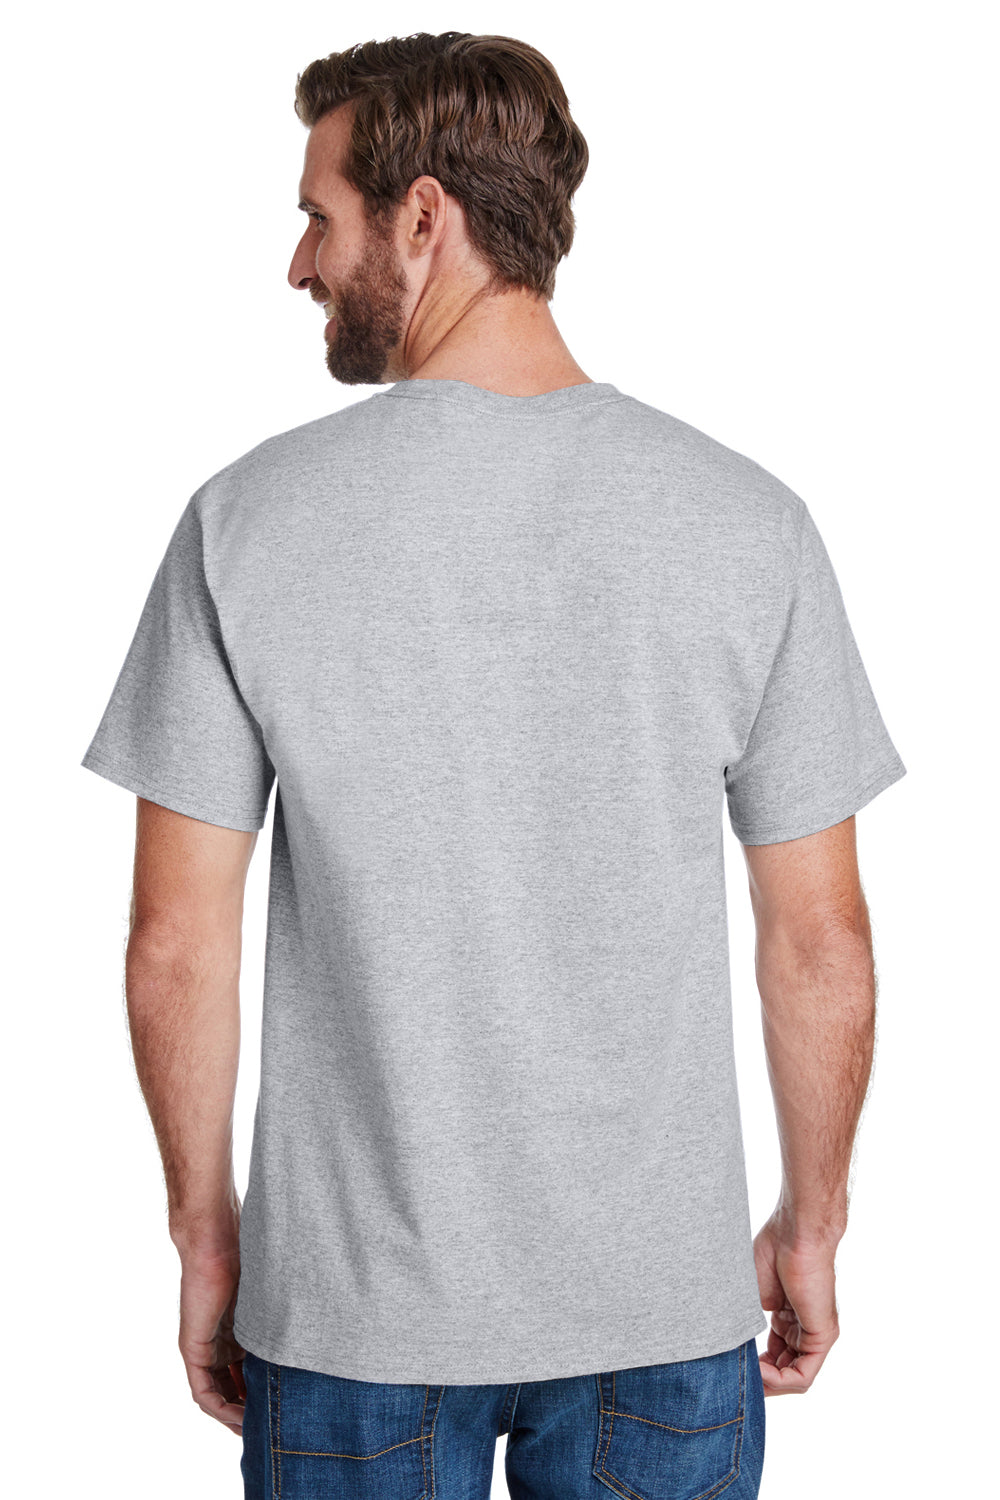 Hanes W110 Mens Workwear Short Sleeve Crewneck T-Shirt w/ Pocket Light Steel Grey Back